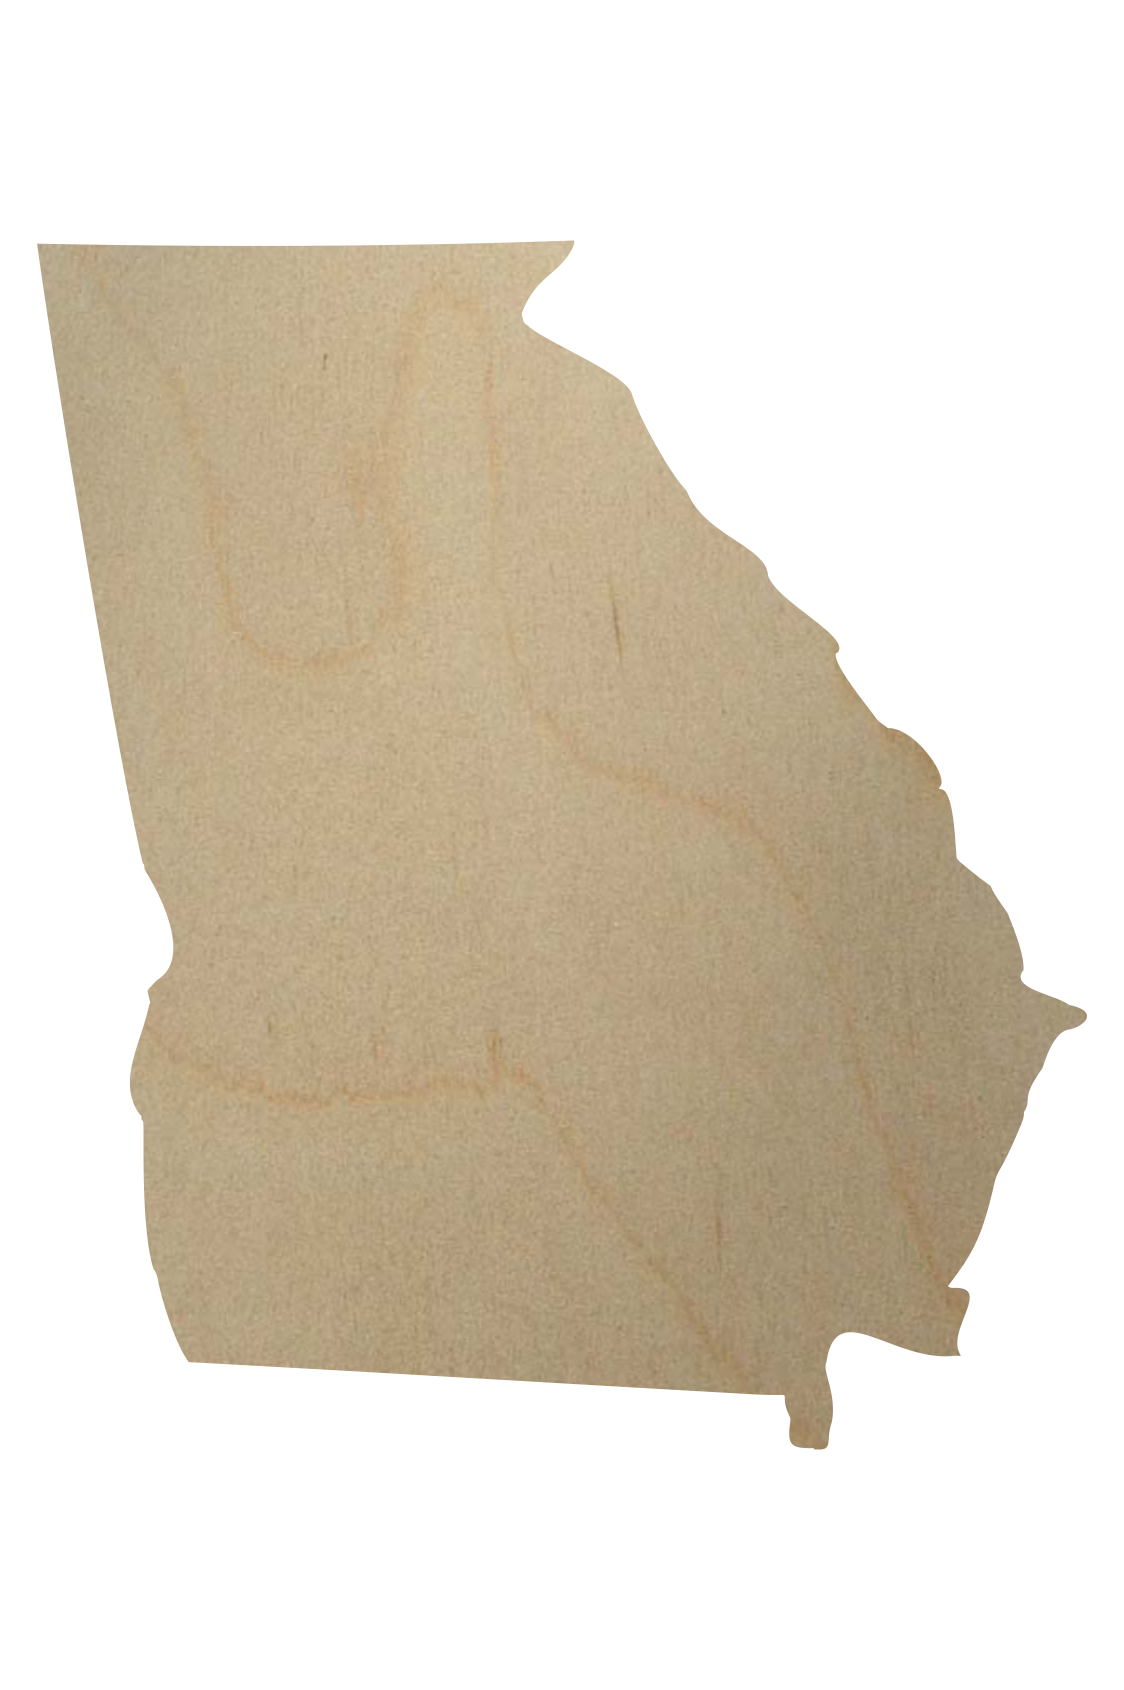 Cut Out Oregon State Cutout State Shape Craft Supply Wood Shape Unfinished.